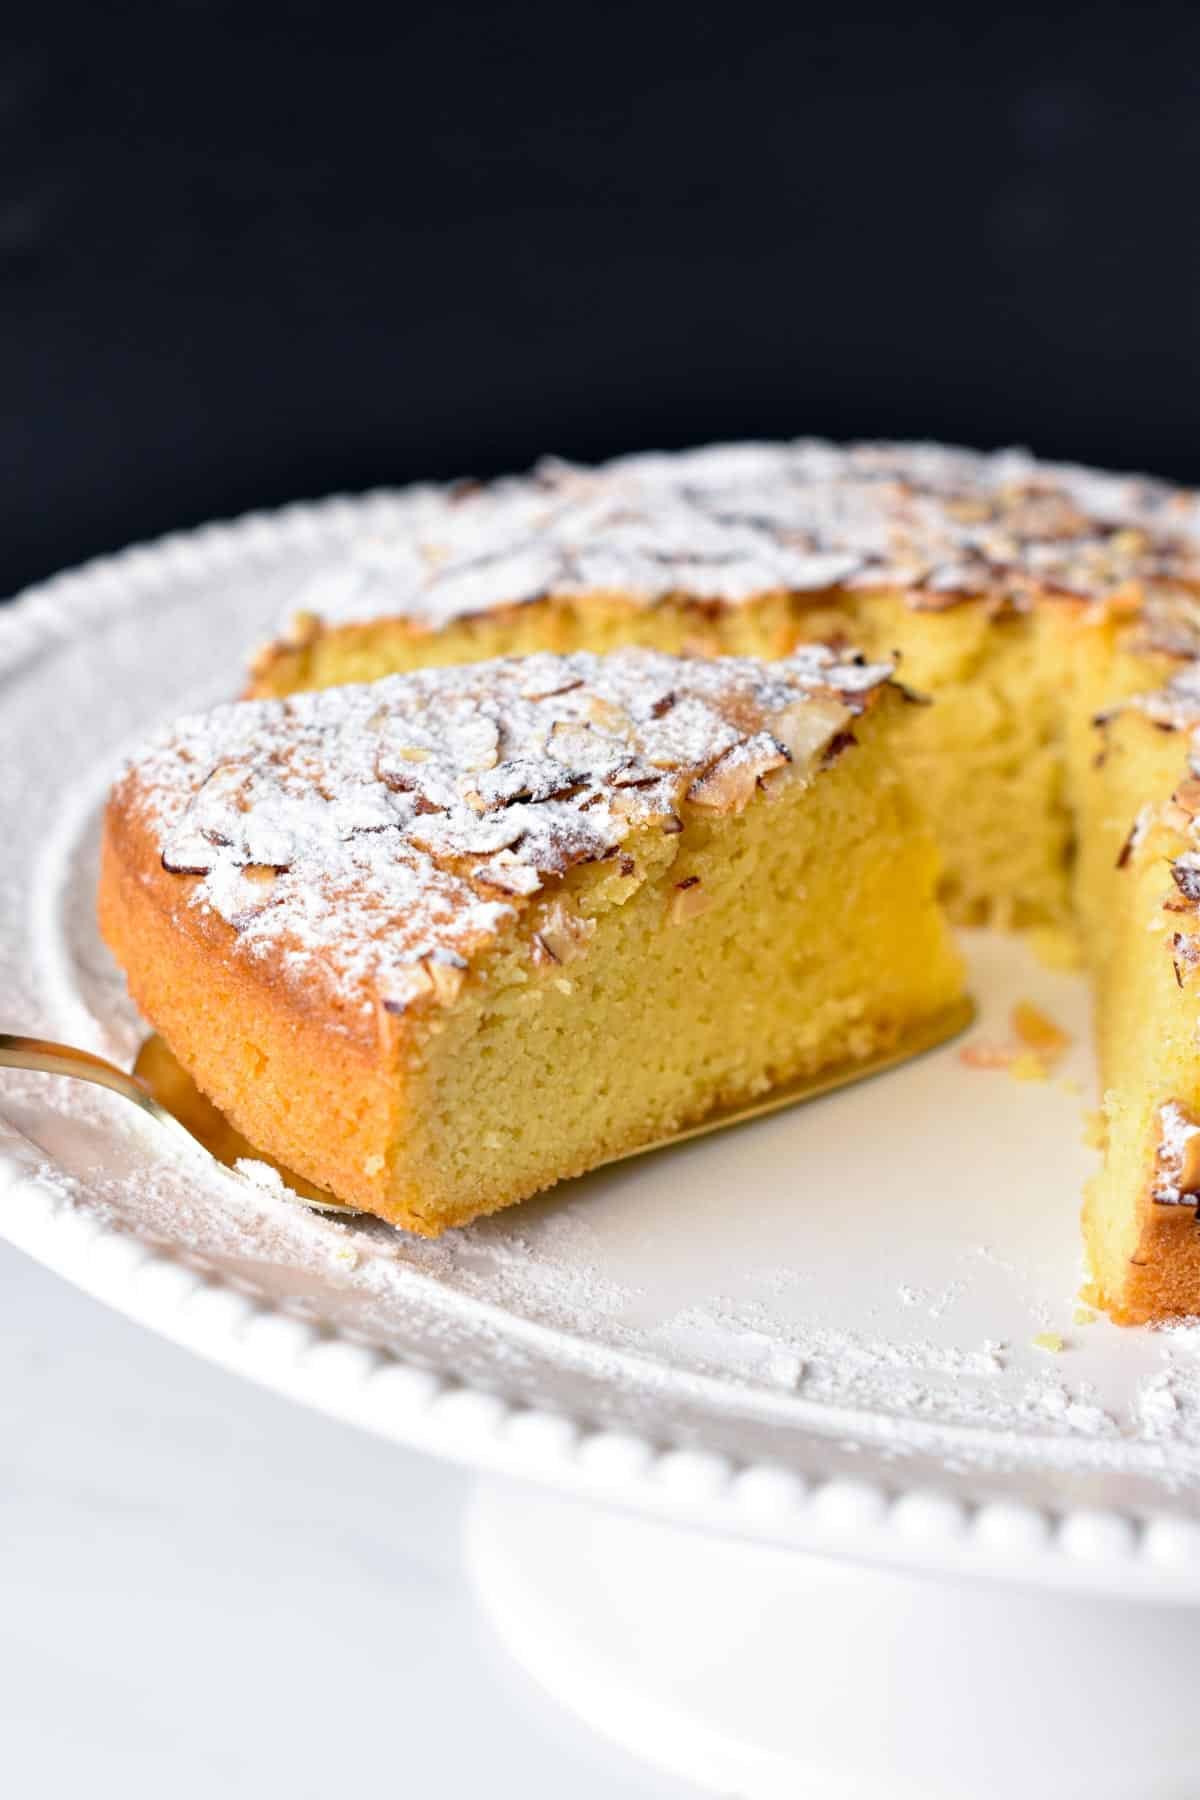 Flourless Almond Cake on a cake stand with one slice on a cake spatula.